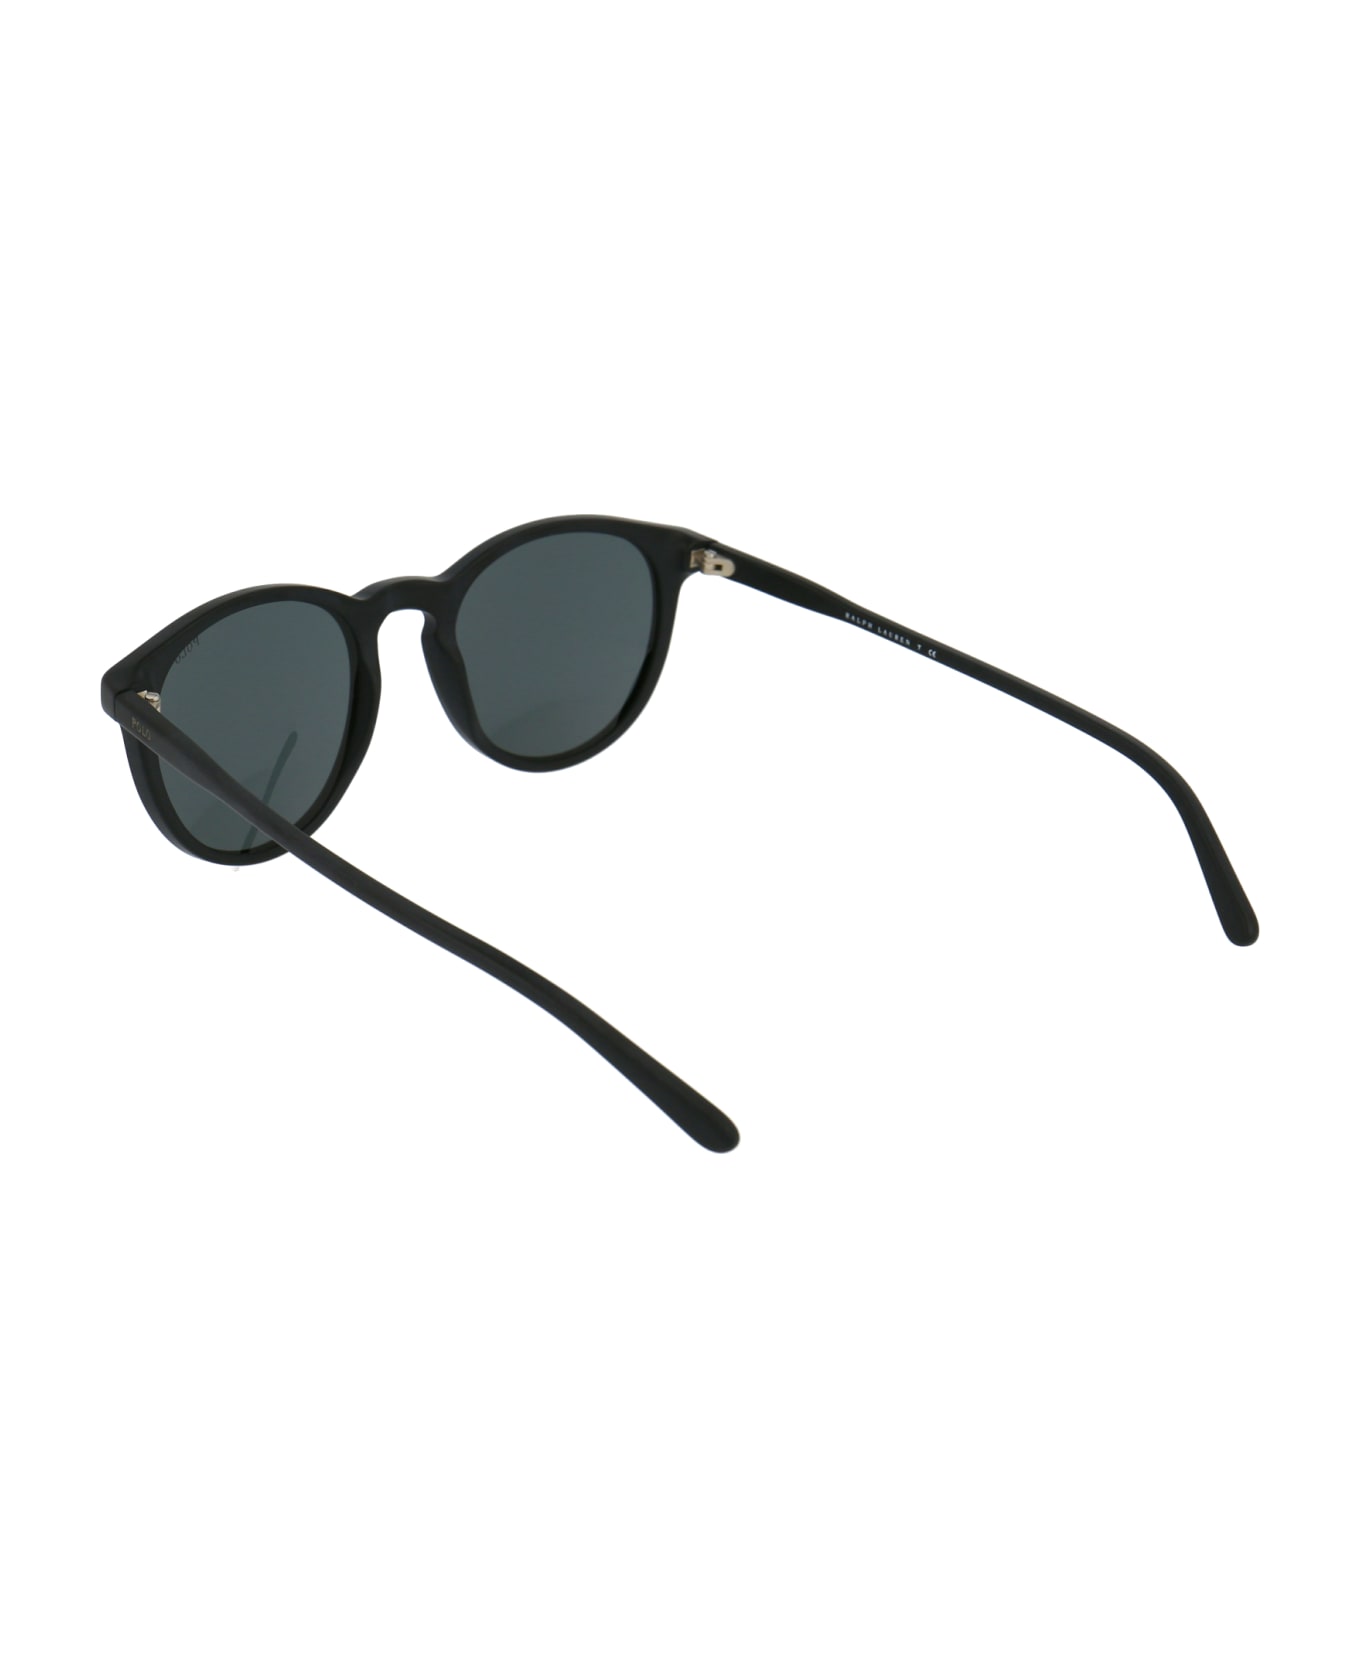 Polo Ralph Lauren 0ph4110 Sunglasses - 528487 MATTE BLACK サングラス